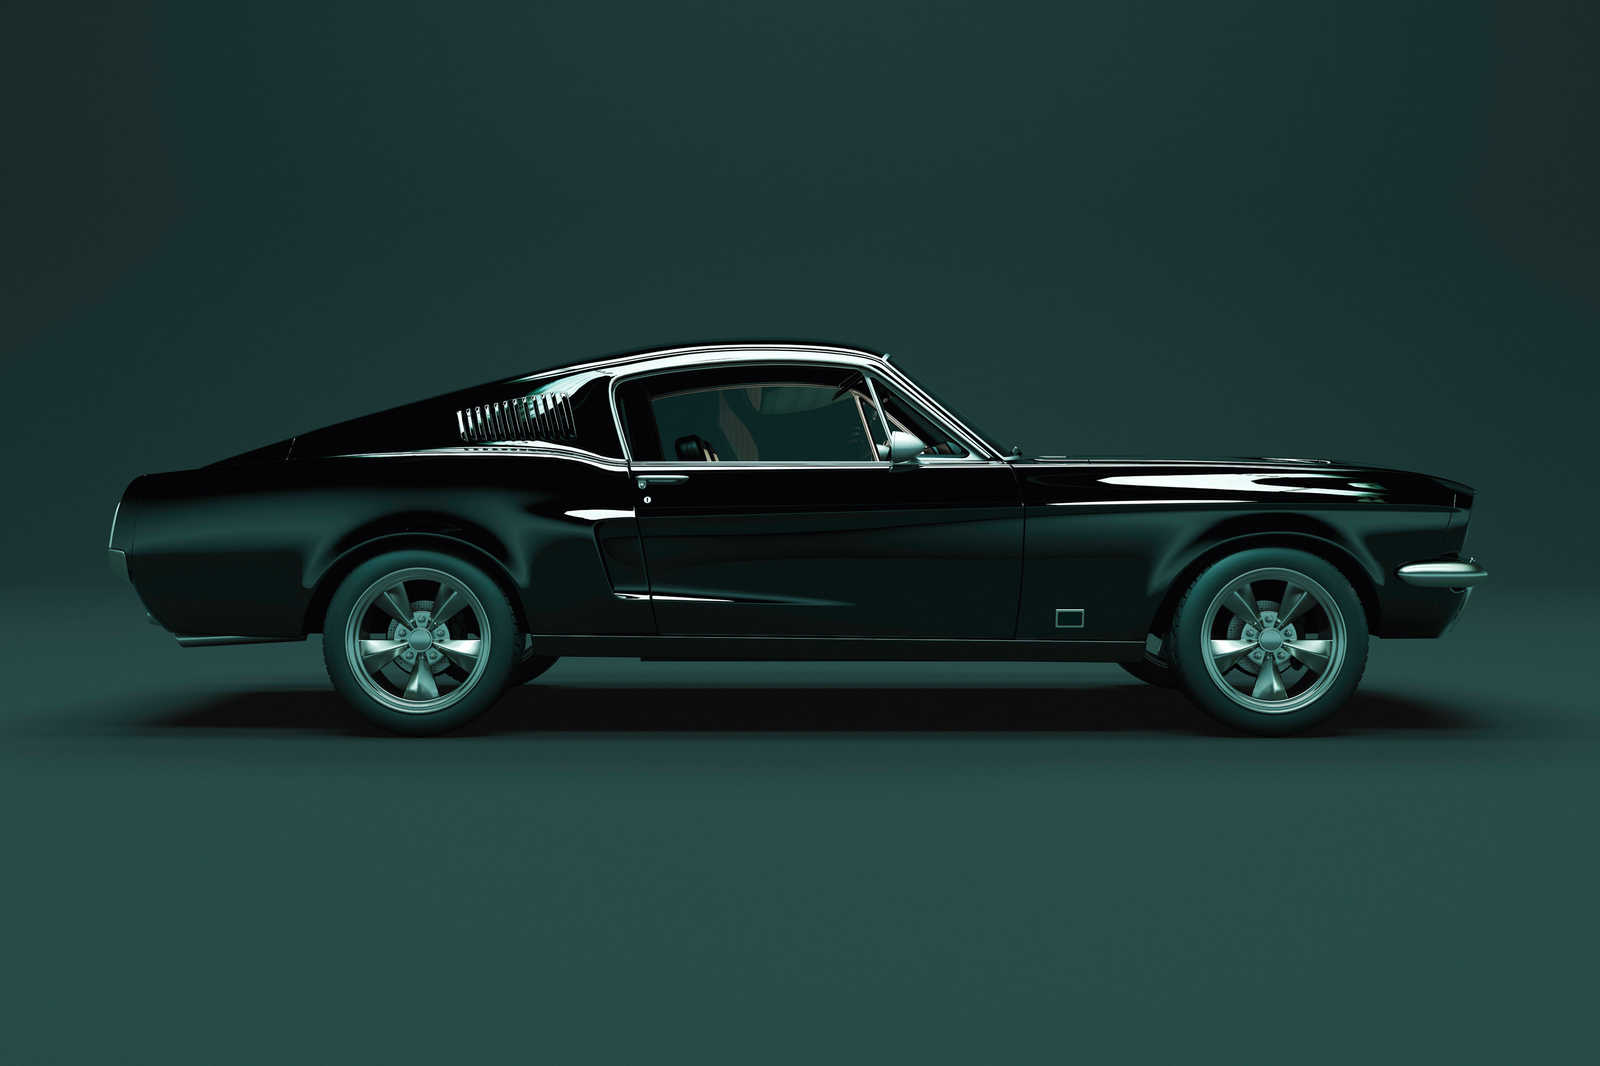             Mustang 1 - Toile, vue latérale Mustang, Vintage - 0,90 m x 0,60 m
        